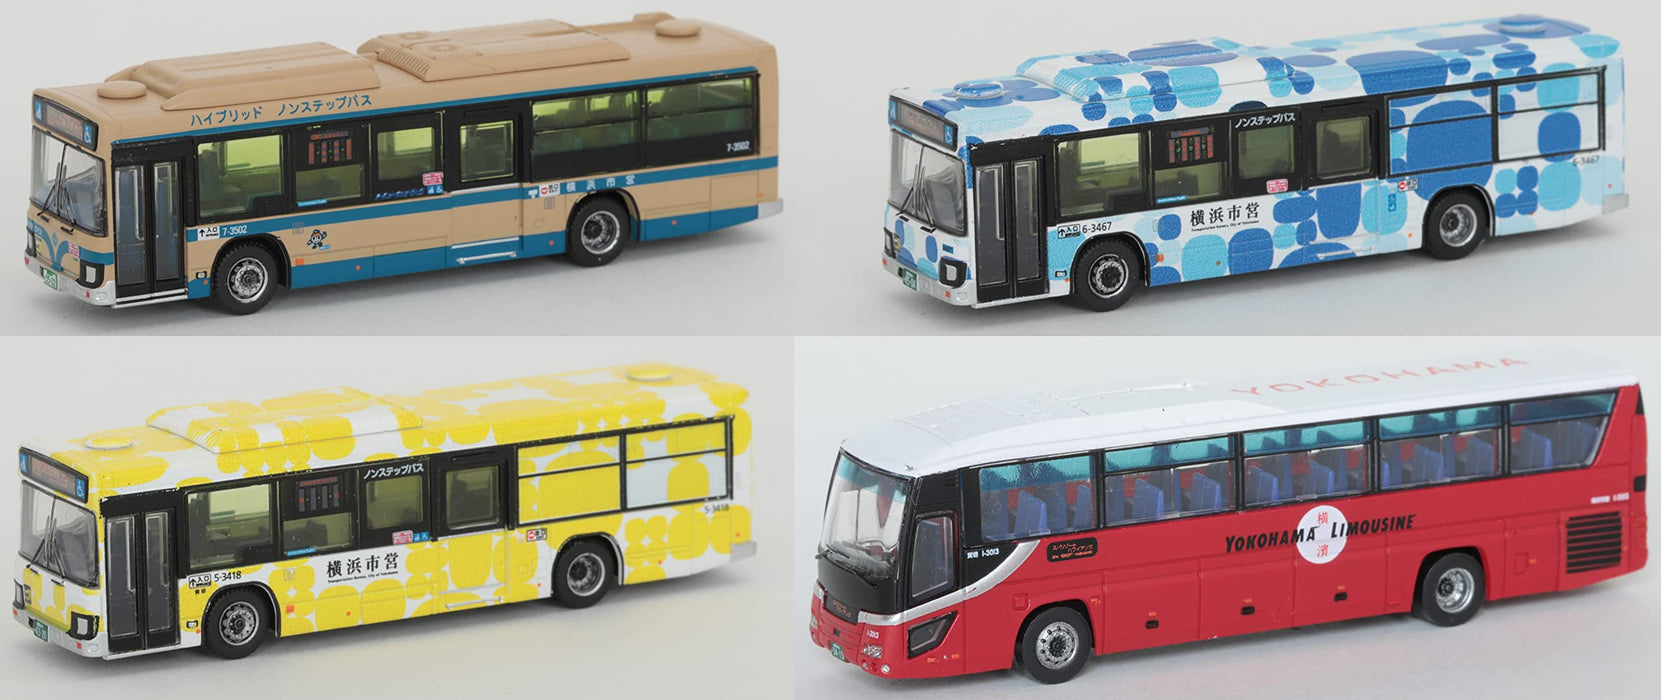 Tomytec Bus Collection - Yokohama 100th Anniversary 12 Boxes Diorama Supplies Limited Edition